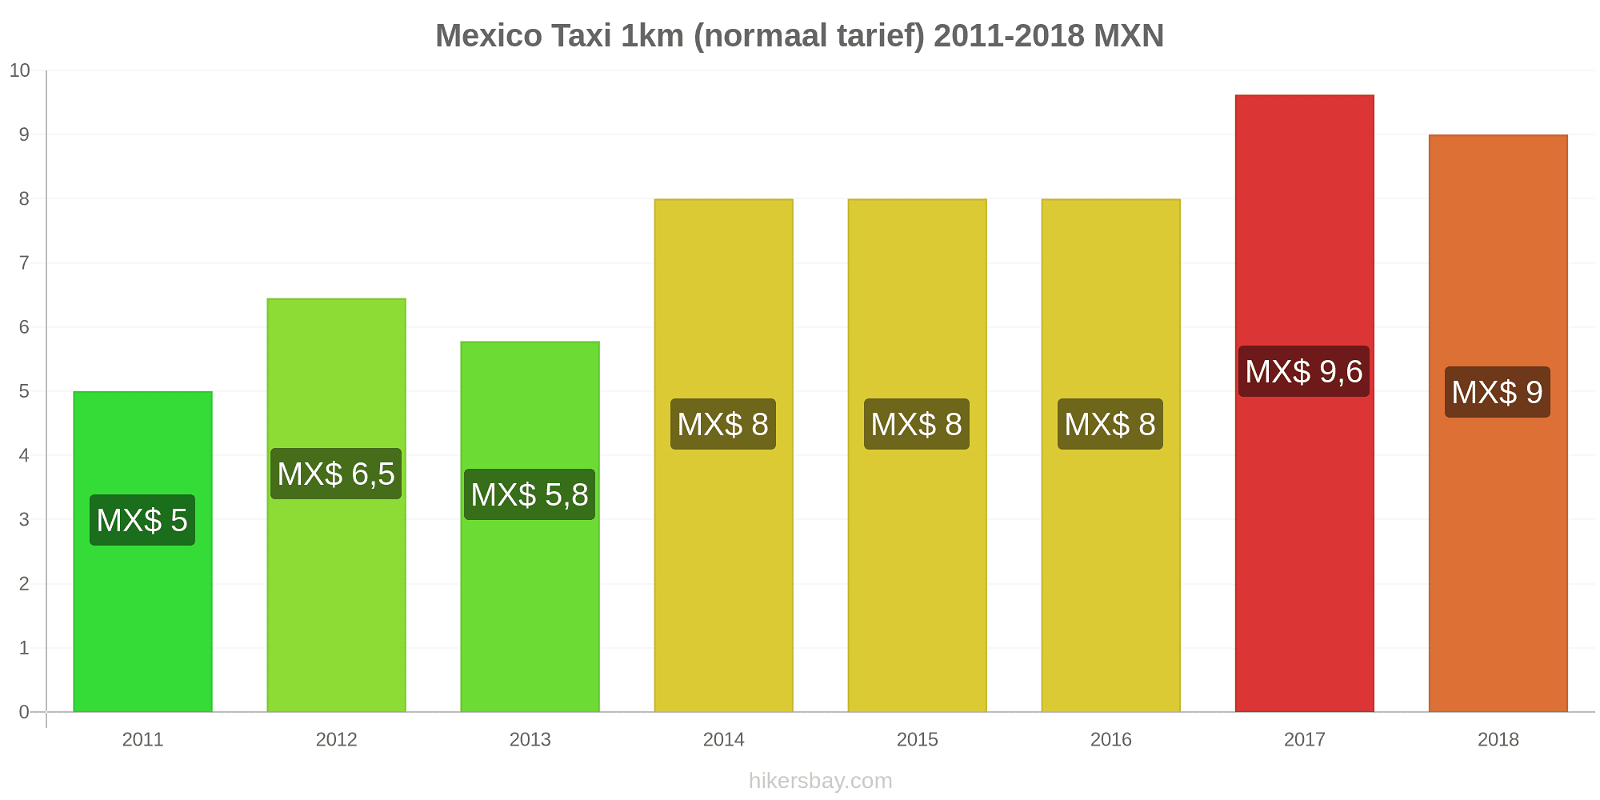 Mexico prijswijzigingen Taxi 1km (normaal tarief) hikersbay.com